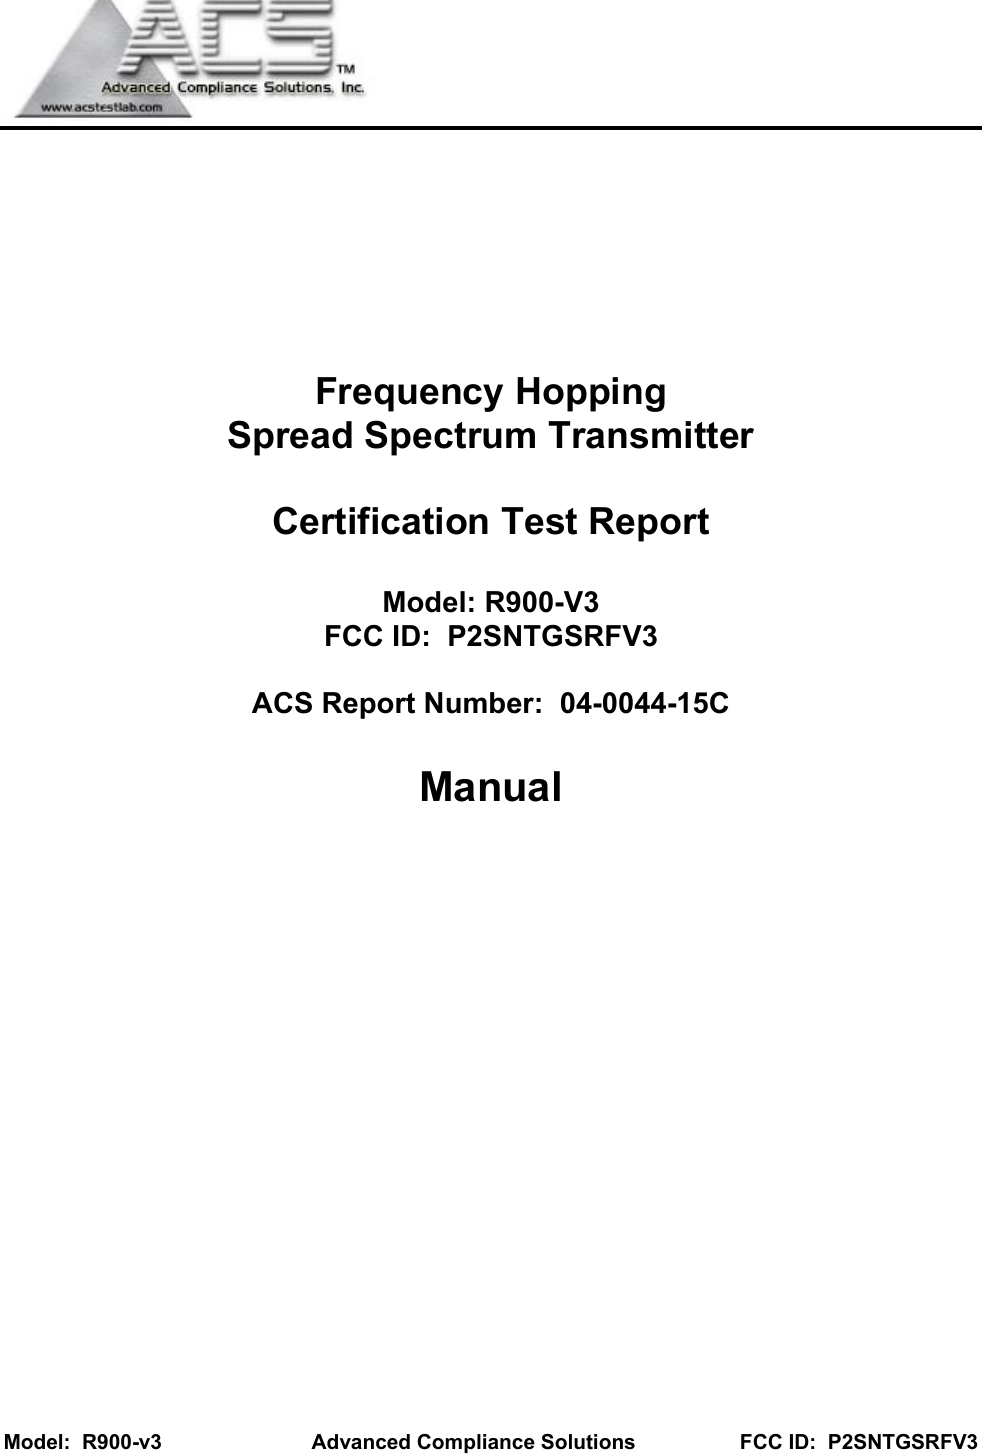   Model:  R900-v3         Advanced Compliance Solutions                  FCC ID:  P2SNTGSRFV3       Frequency Hopping  Spread Spectrum Transmitter  Certification Test Report  Model: R900-V3 FCC ID:  P2SNTGSRFV3  ACS Report Number:  04-0044-15C  Manual             